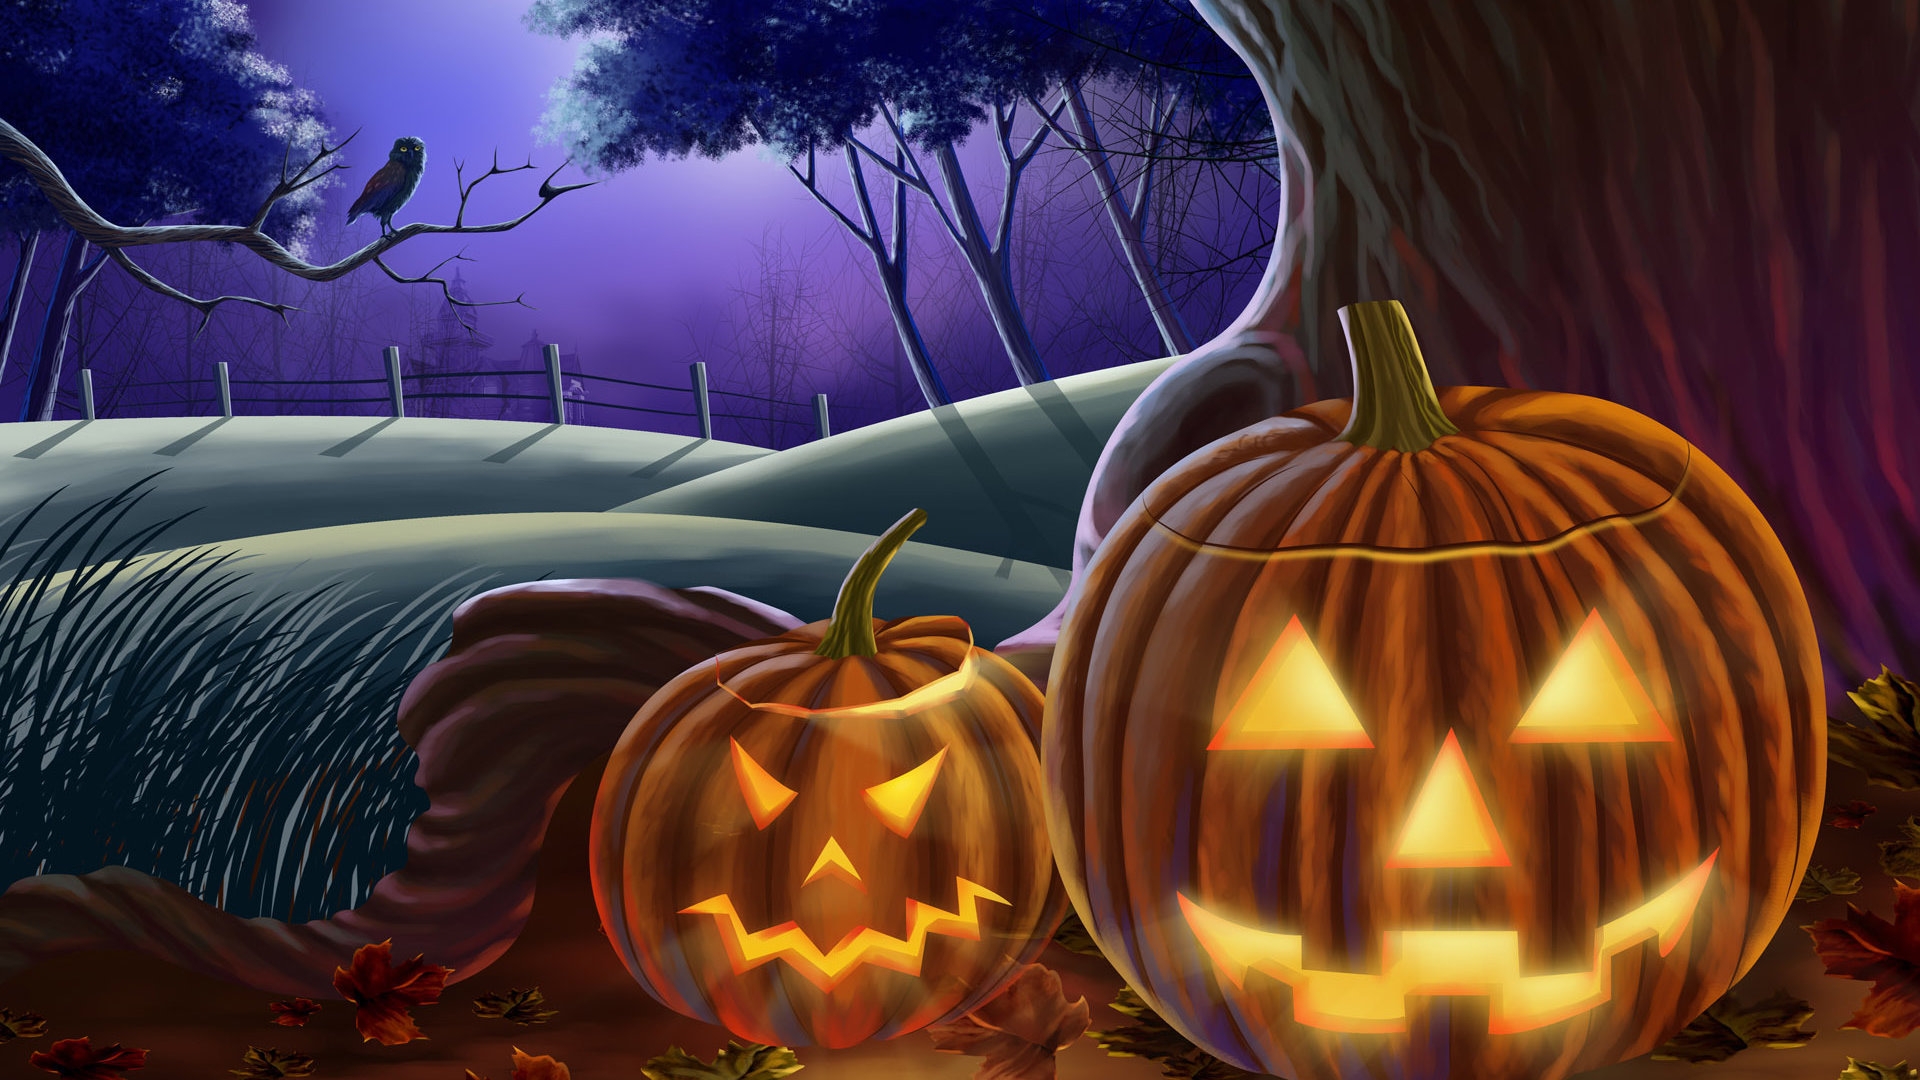 Illuminated Pumpkins for Halloween for 1920 x 1080 HDTV 1080p resolution